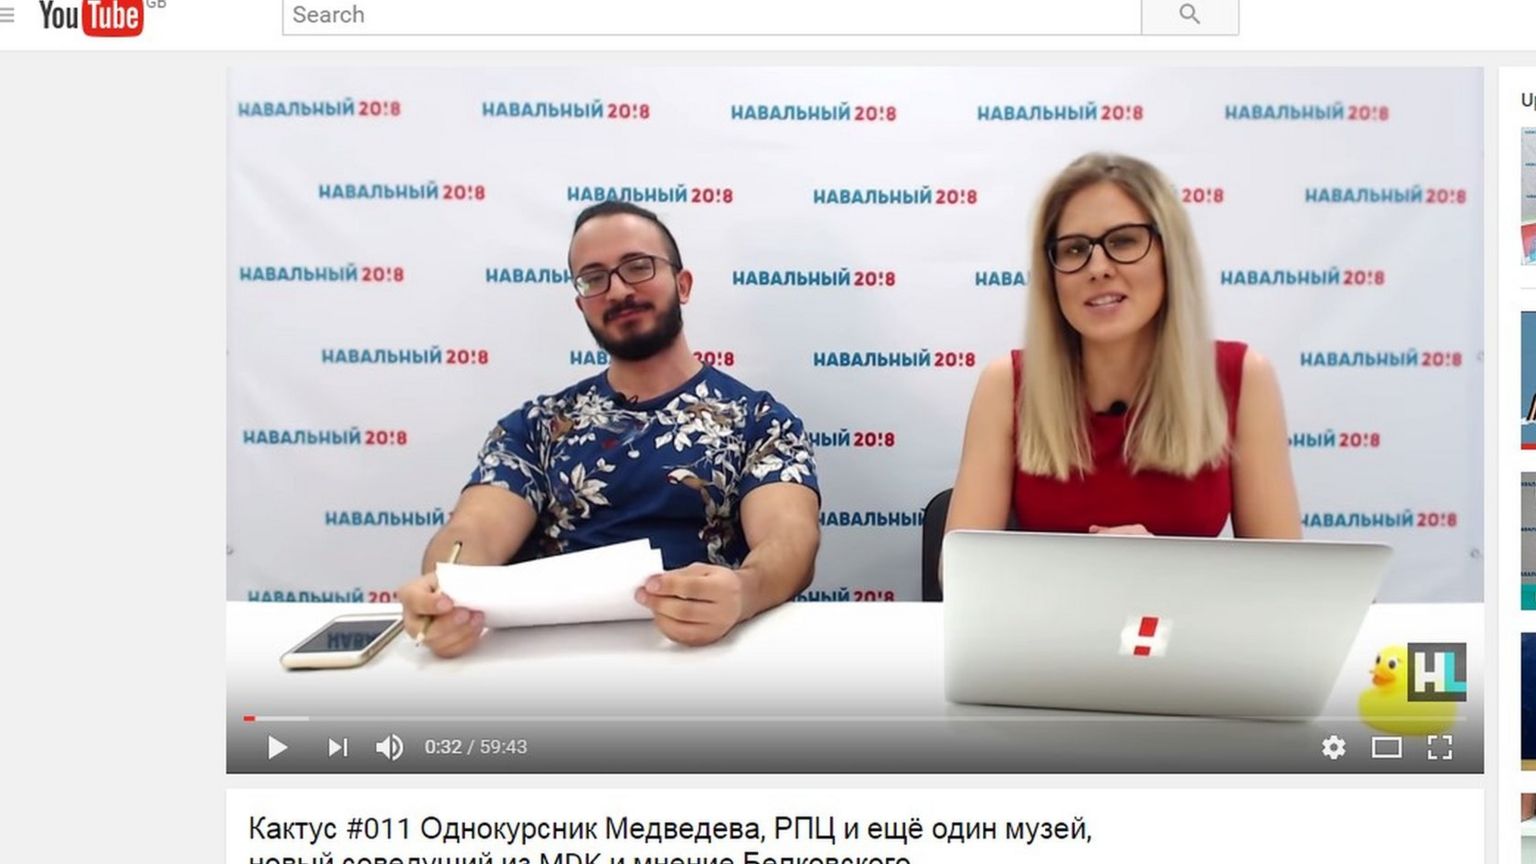 Lyubov Sobol (right) presents the news via her YouTube channel